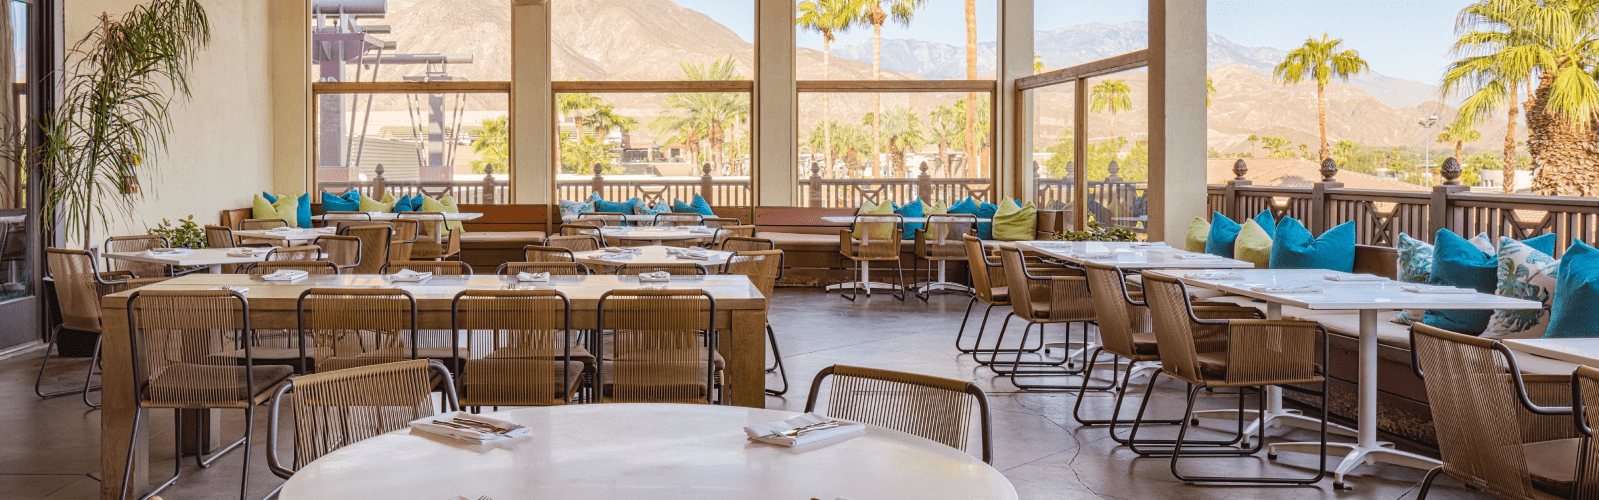 Palm Desert Restaurant patio